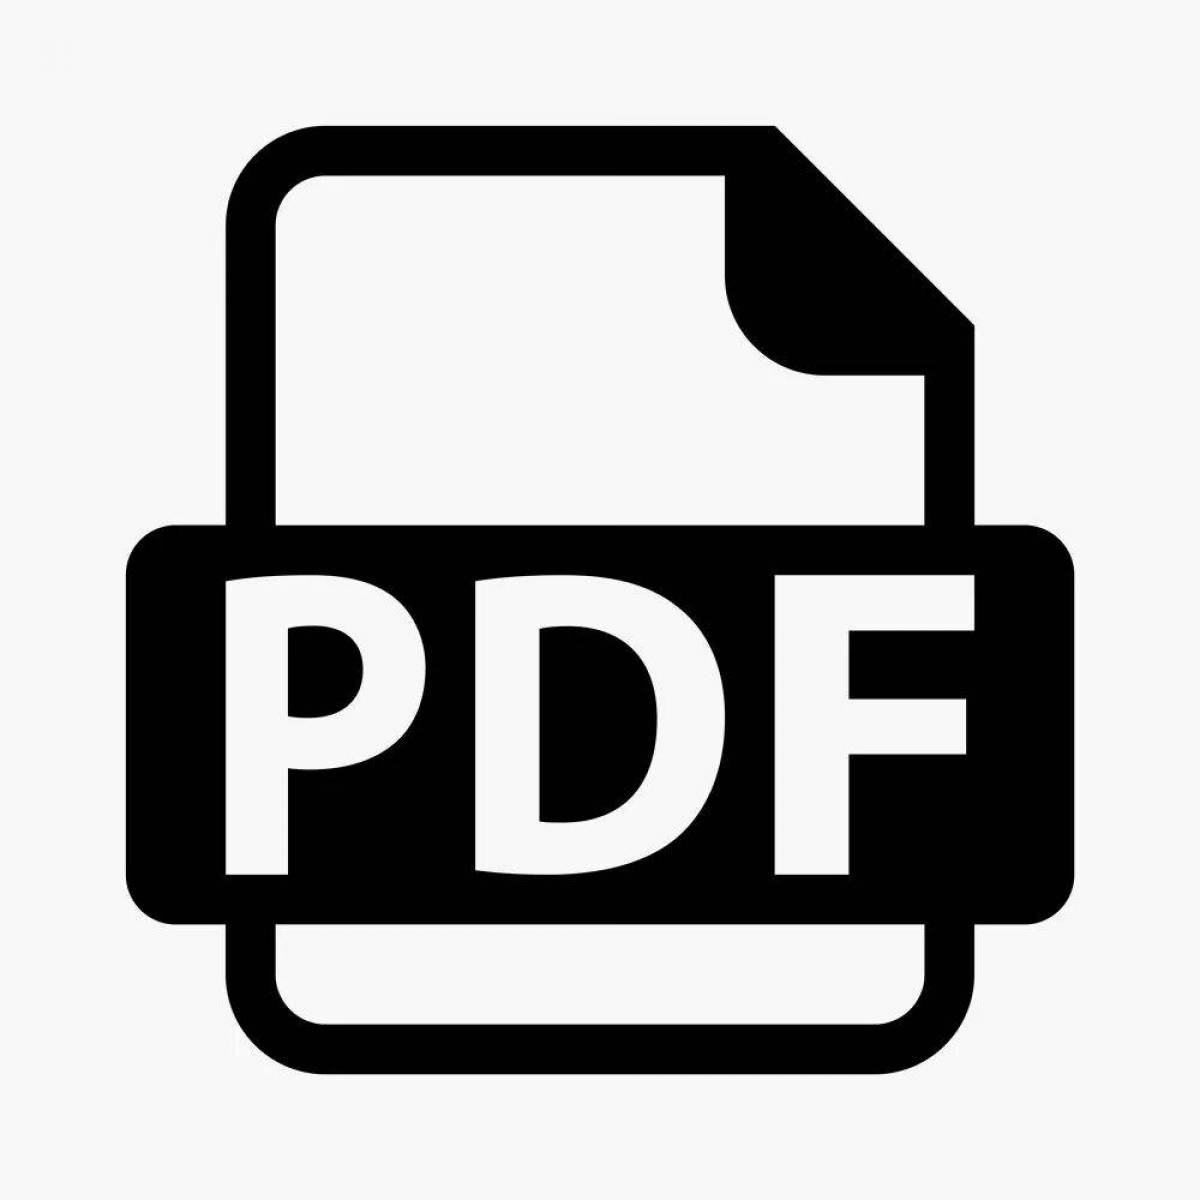 Pdf icon. Pdf картинки. Svg изображения. Иконка. Логотип pdf.